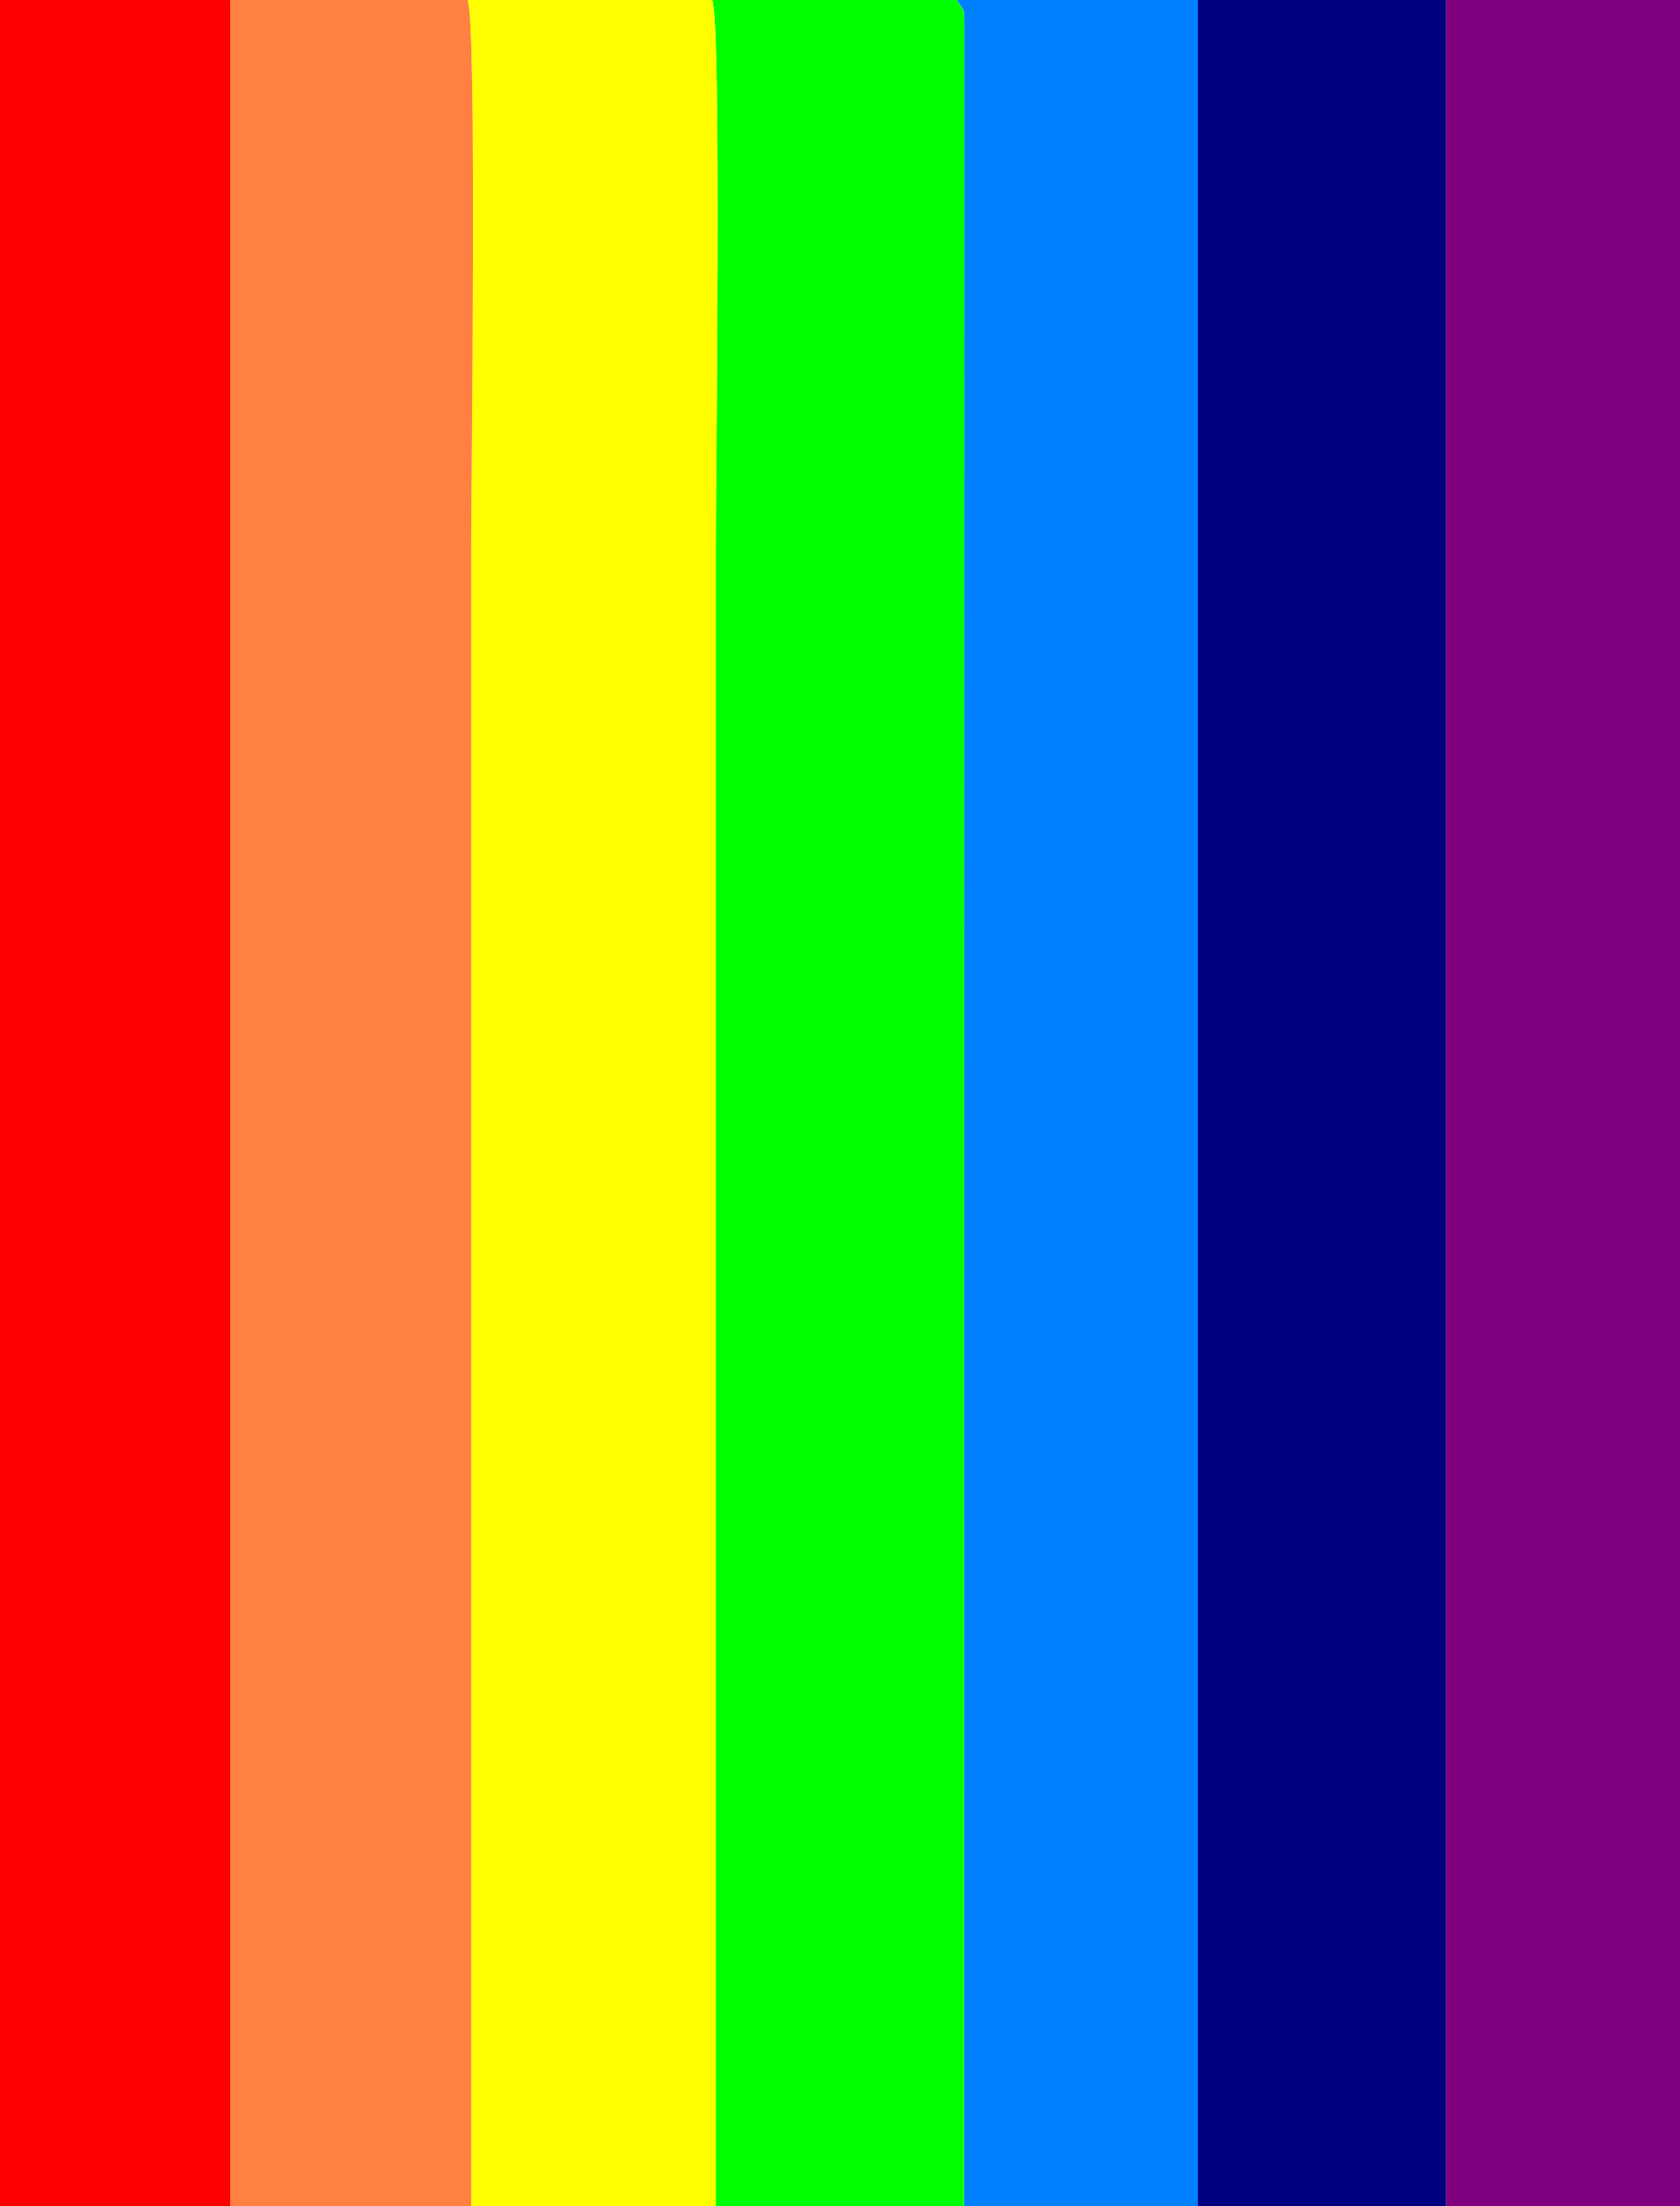 Image Of Rainbow Colors Wallpaper Images Coloring Wallpapers Download Free Images Wallpaper [coloring654.blogspot.com]